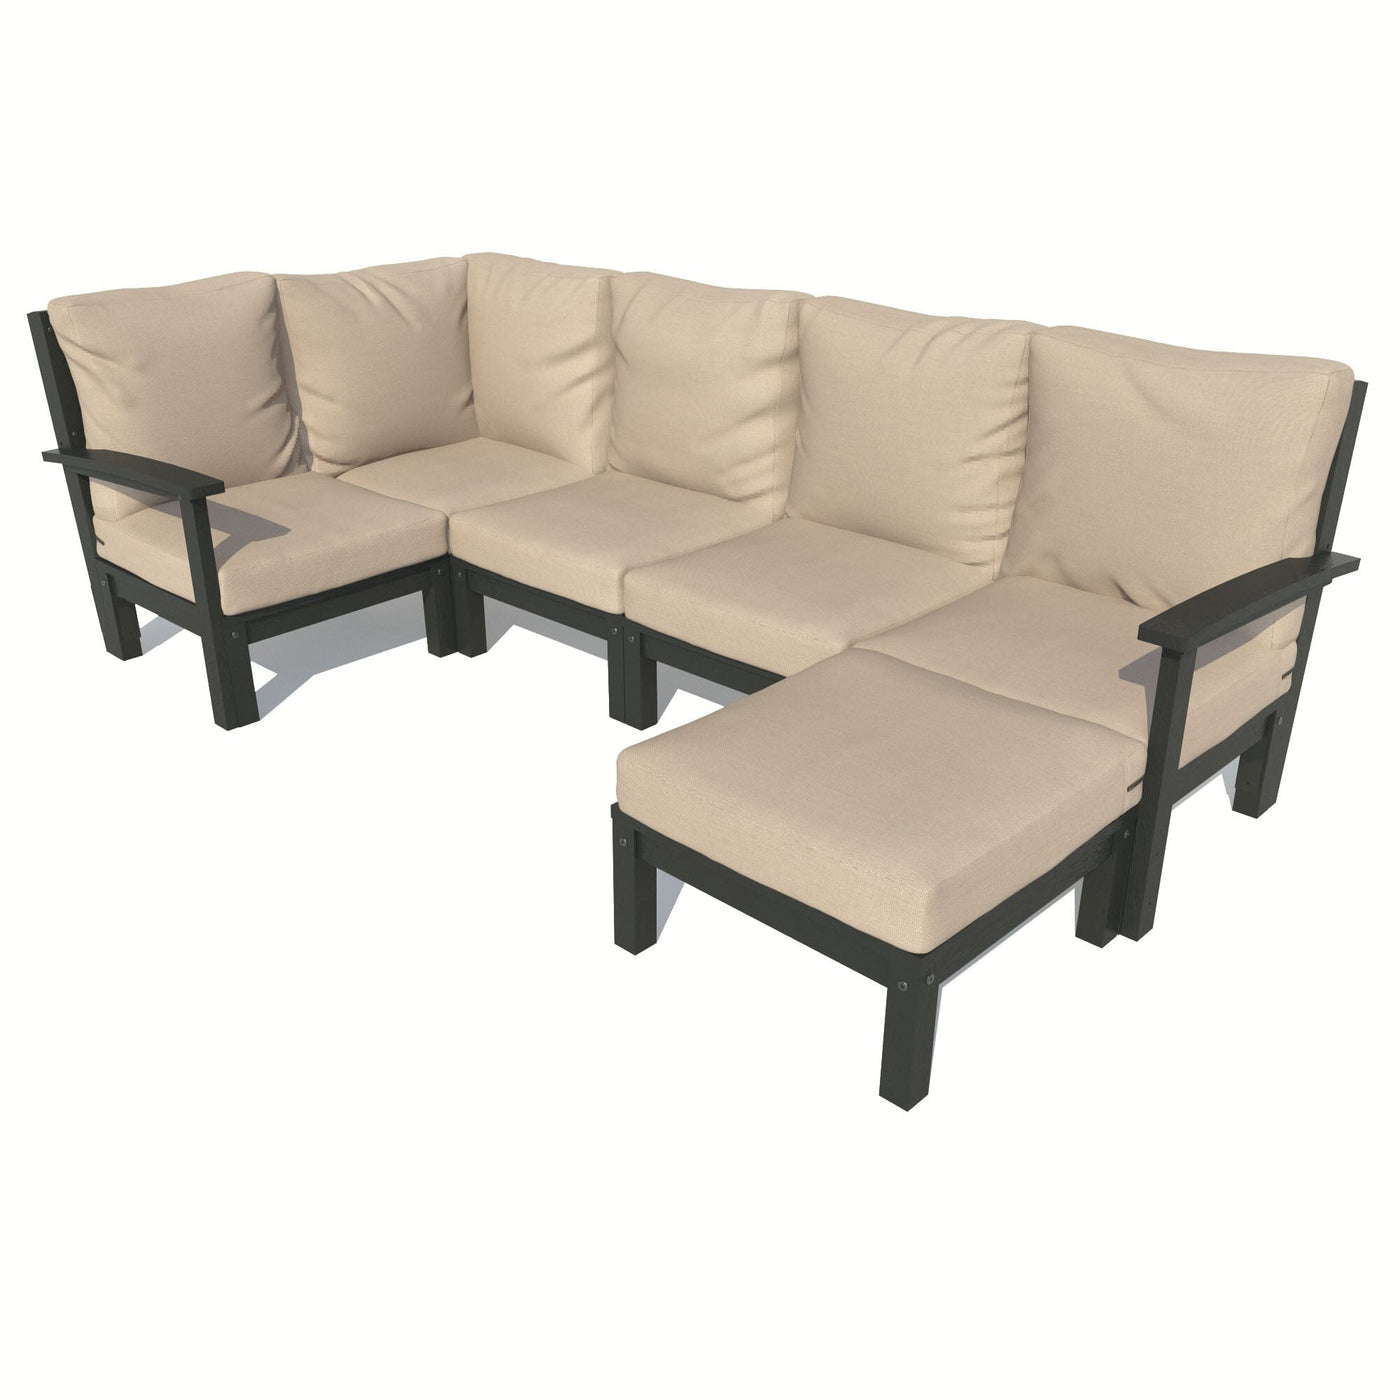 Bespoke Deep Seating: 6 Piece Sectional Set with Ottoman Deep Seating Highwood USA Driftwood Black 